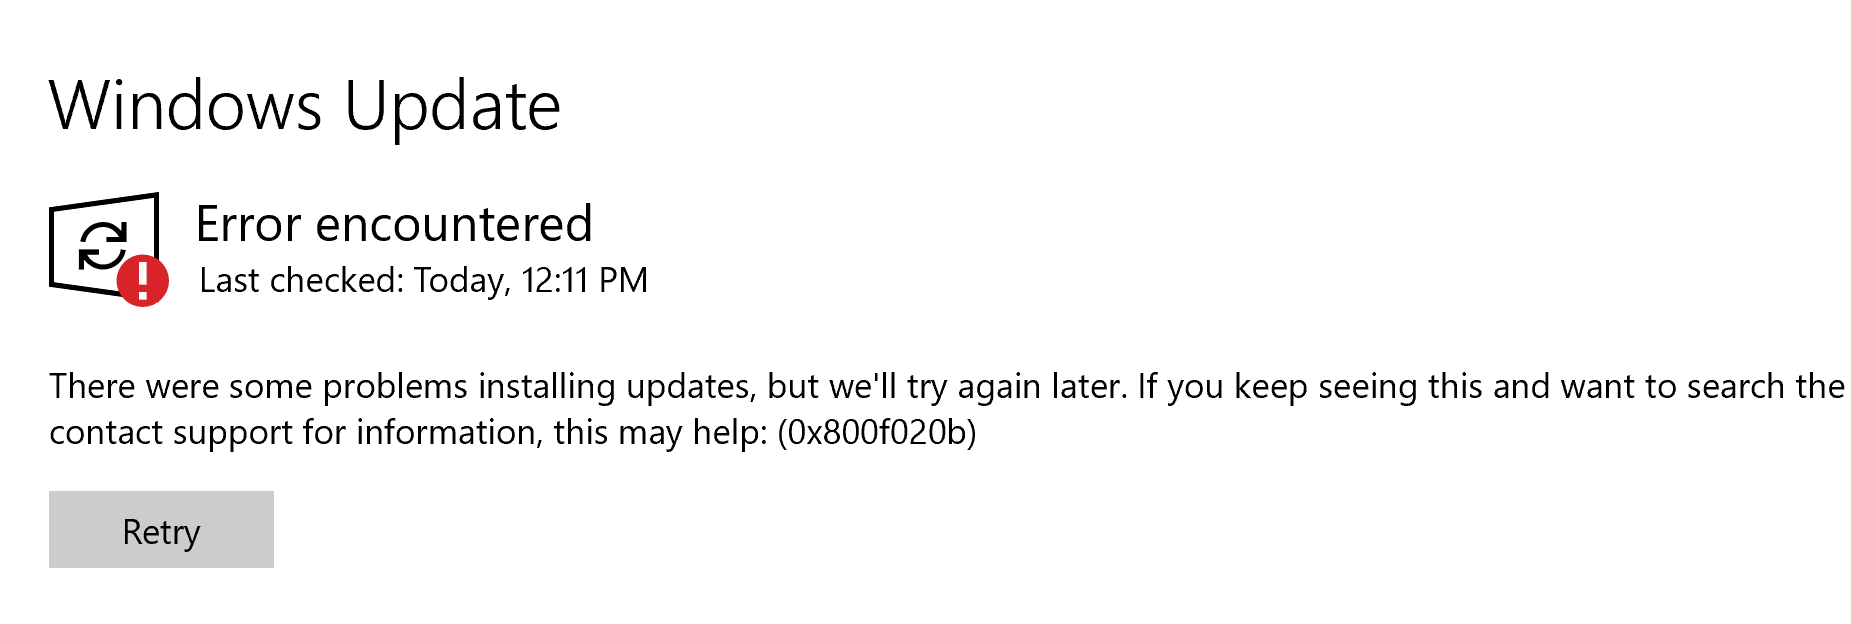 windows update encountered an error